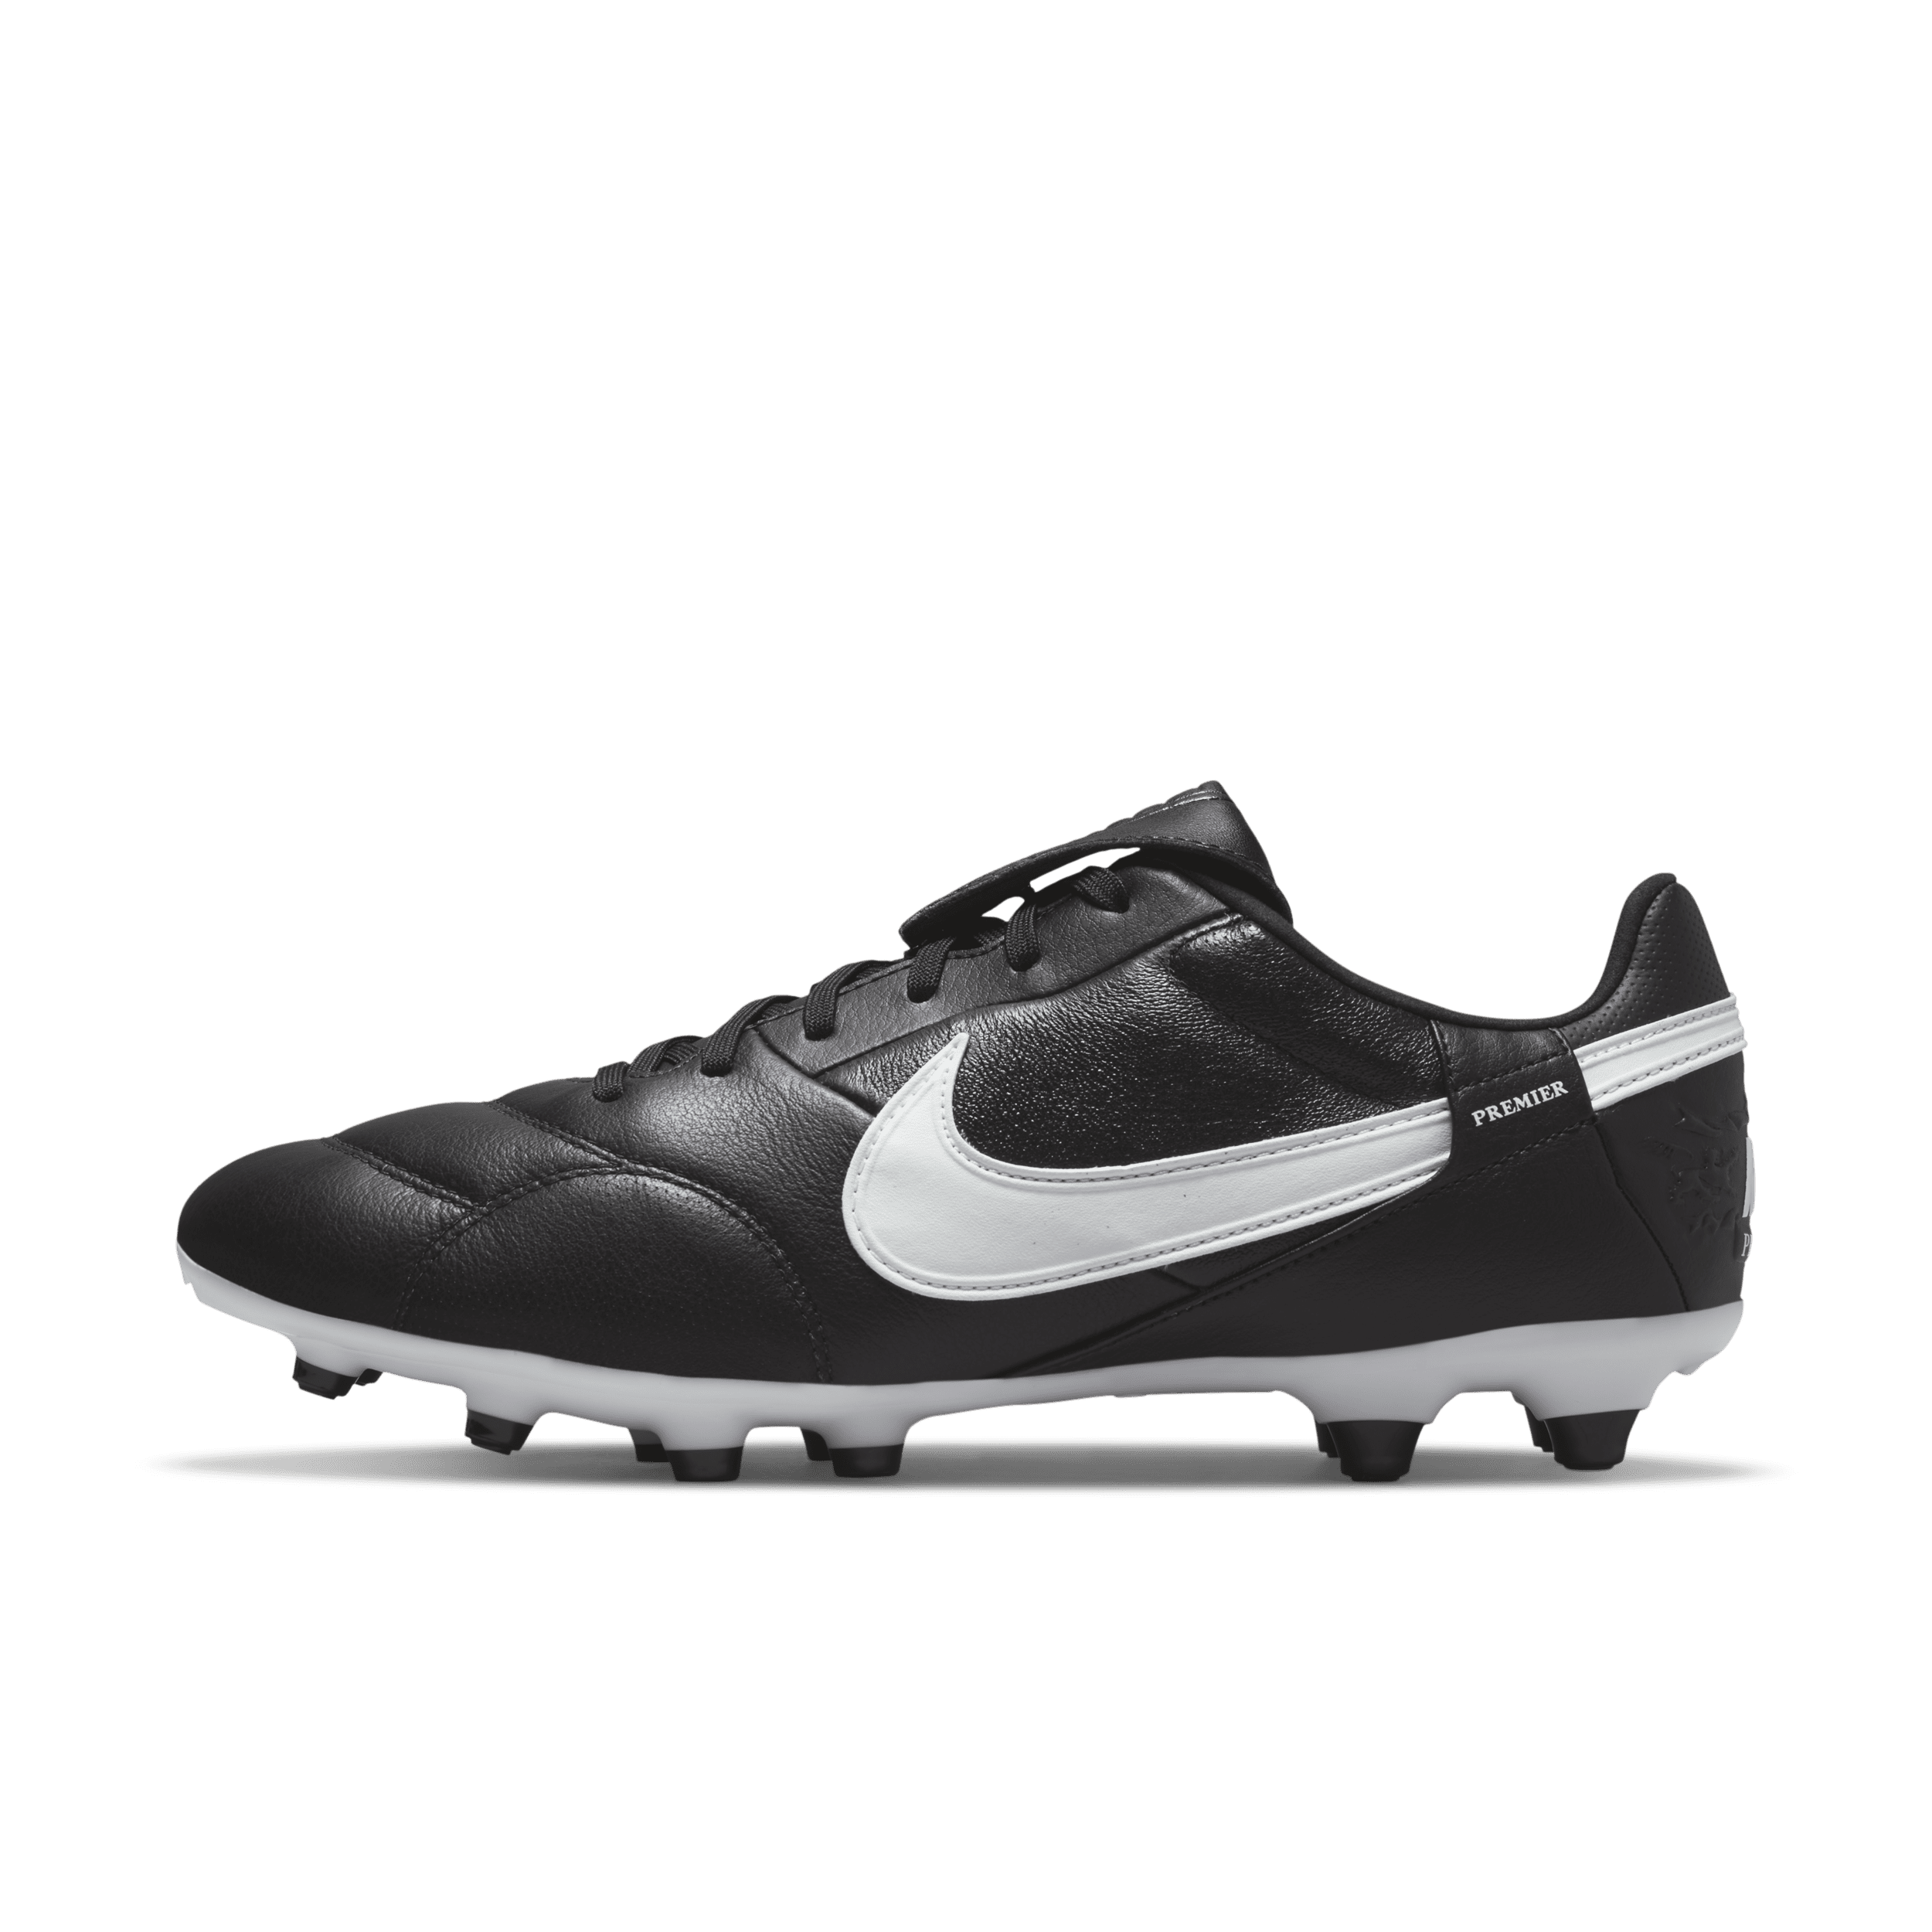 The Nike Premier 3 FG Voetbalschoenen (stevige ondergrond) – Zwart